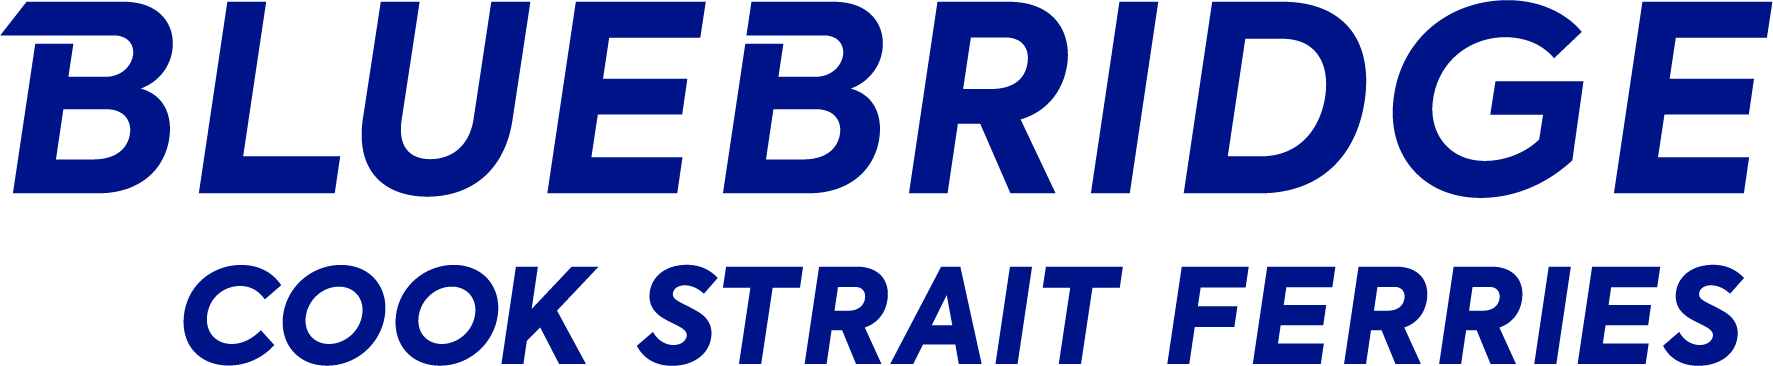 bb-logo-mob.png